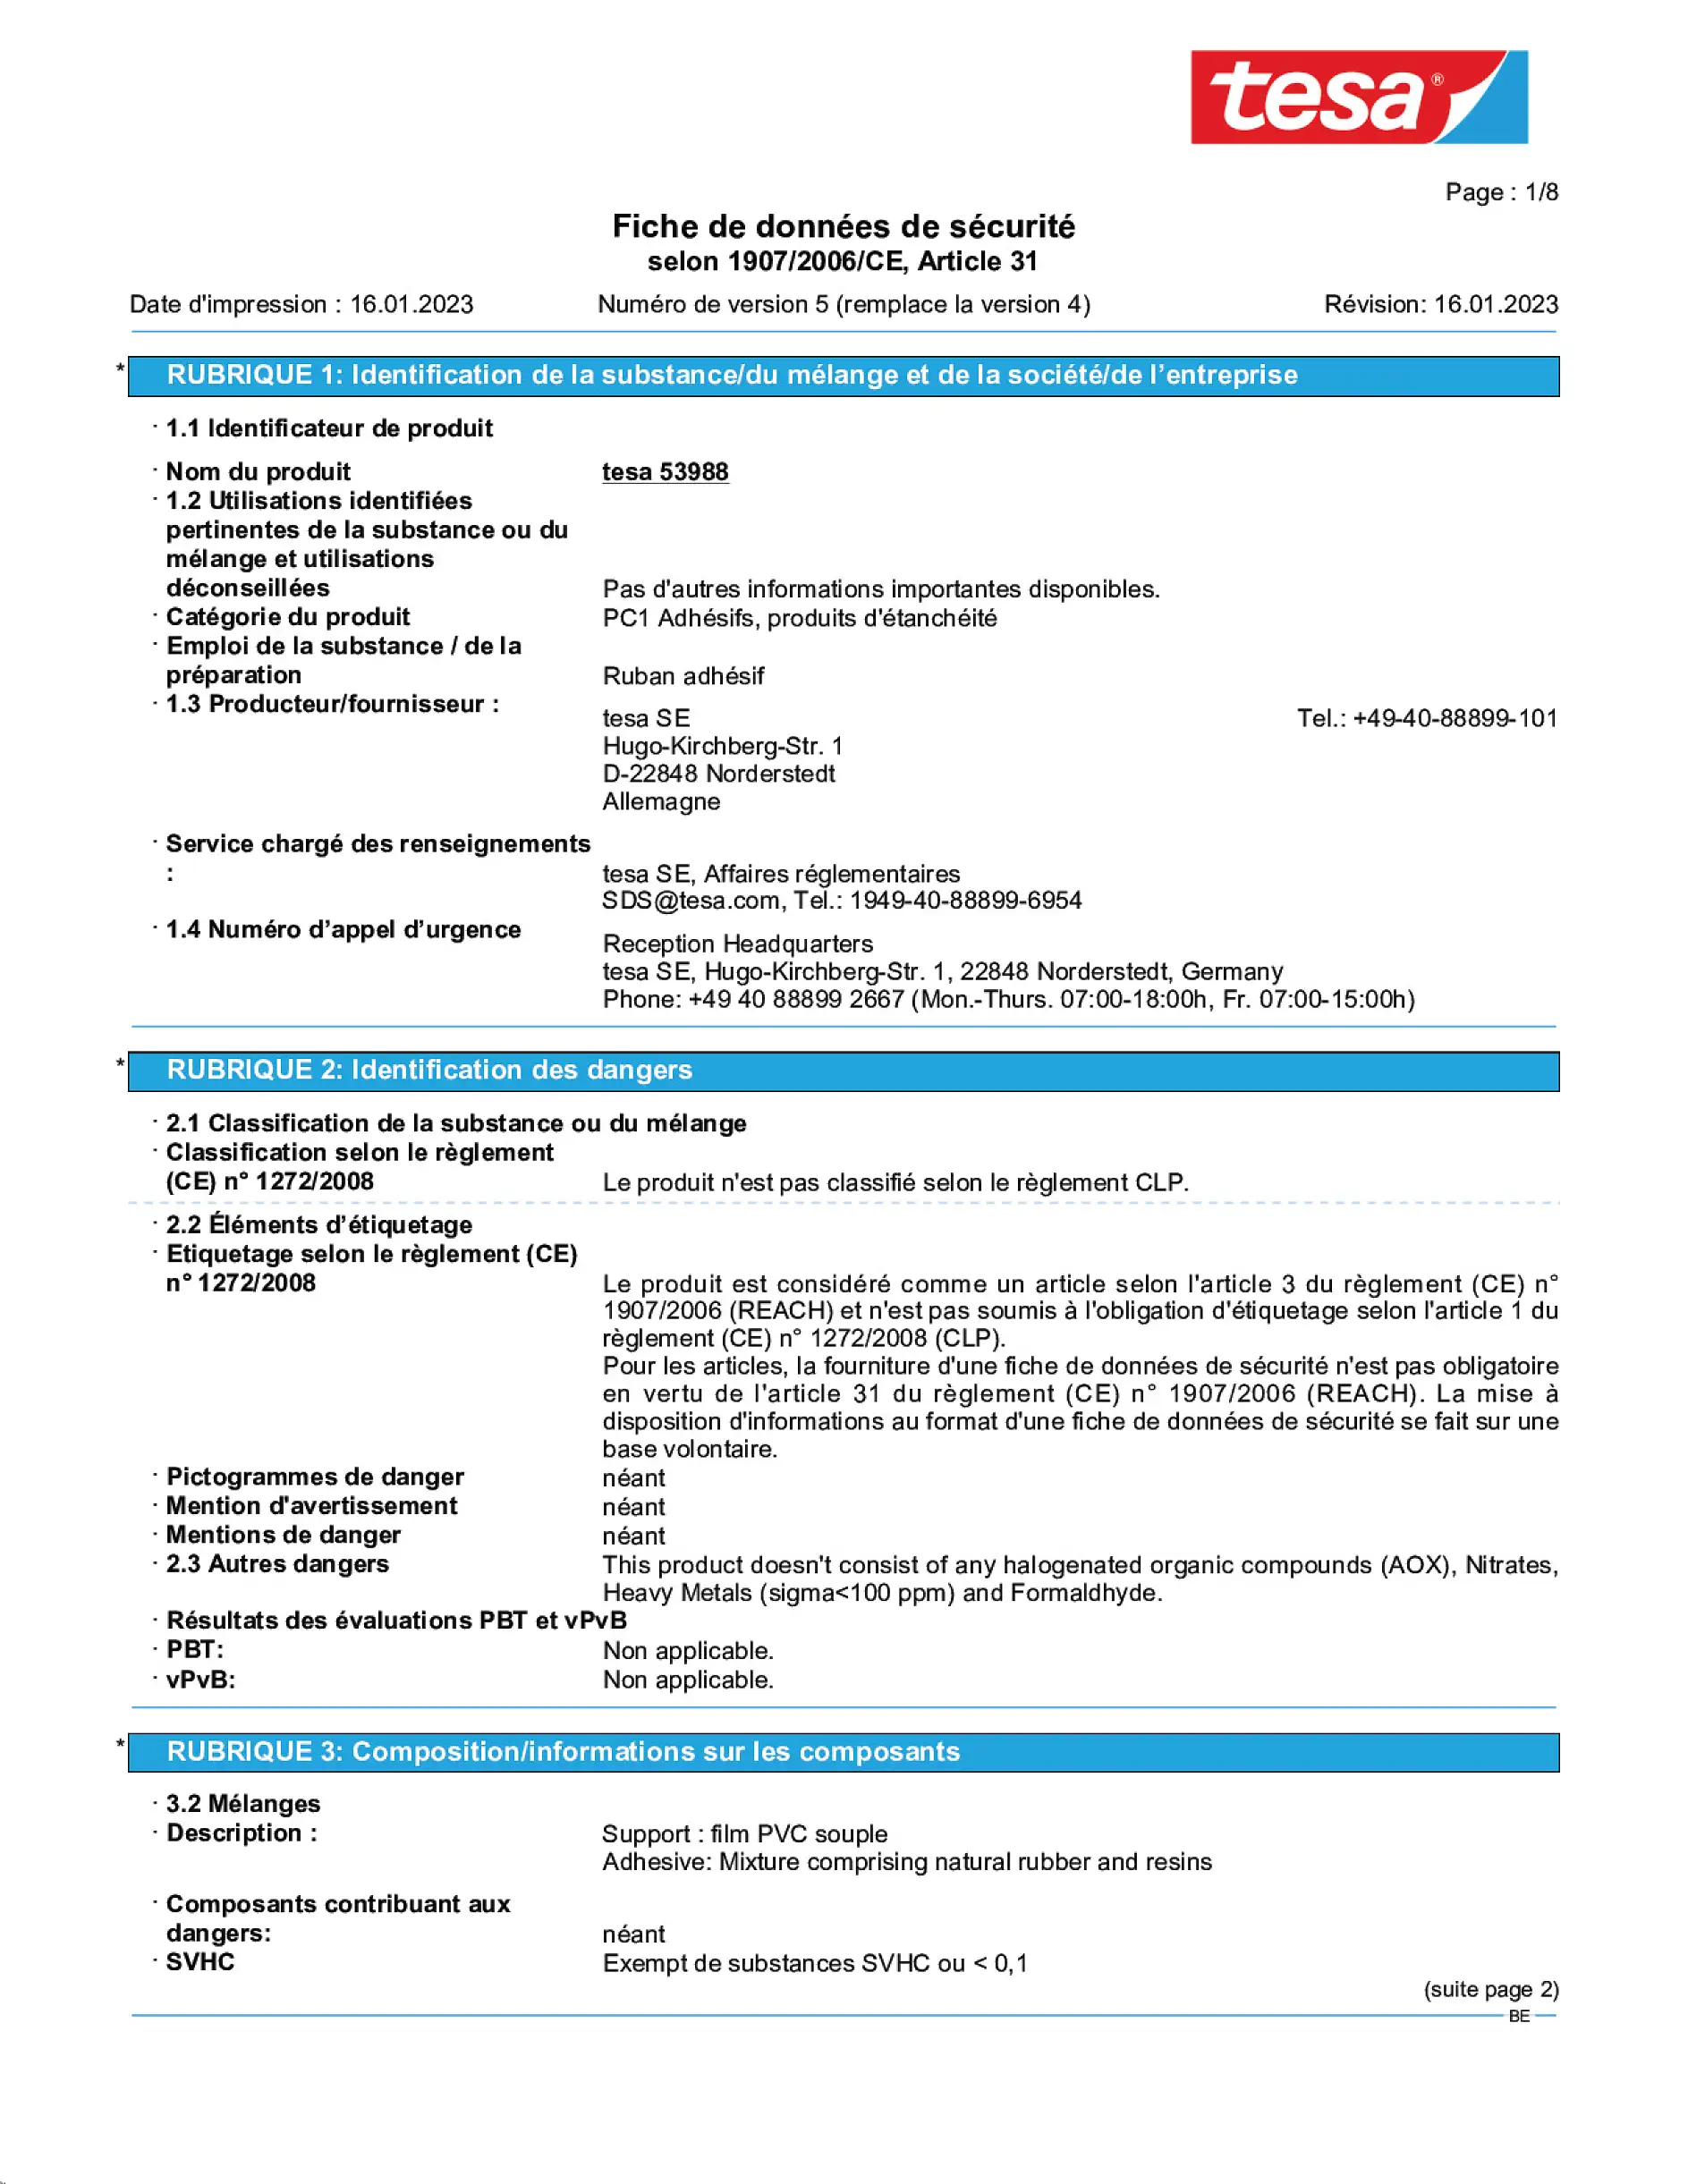 Safety data sheet_tesa® Professional 53988_nl-BE_v5